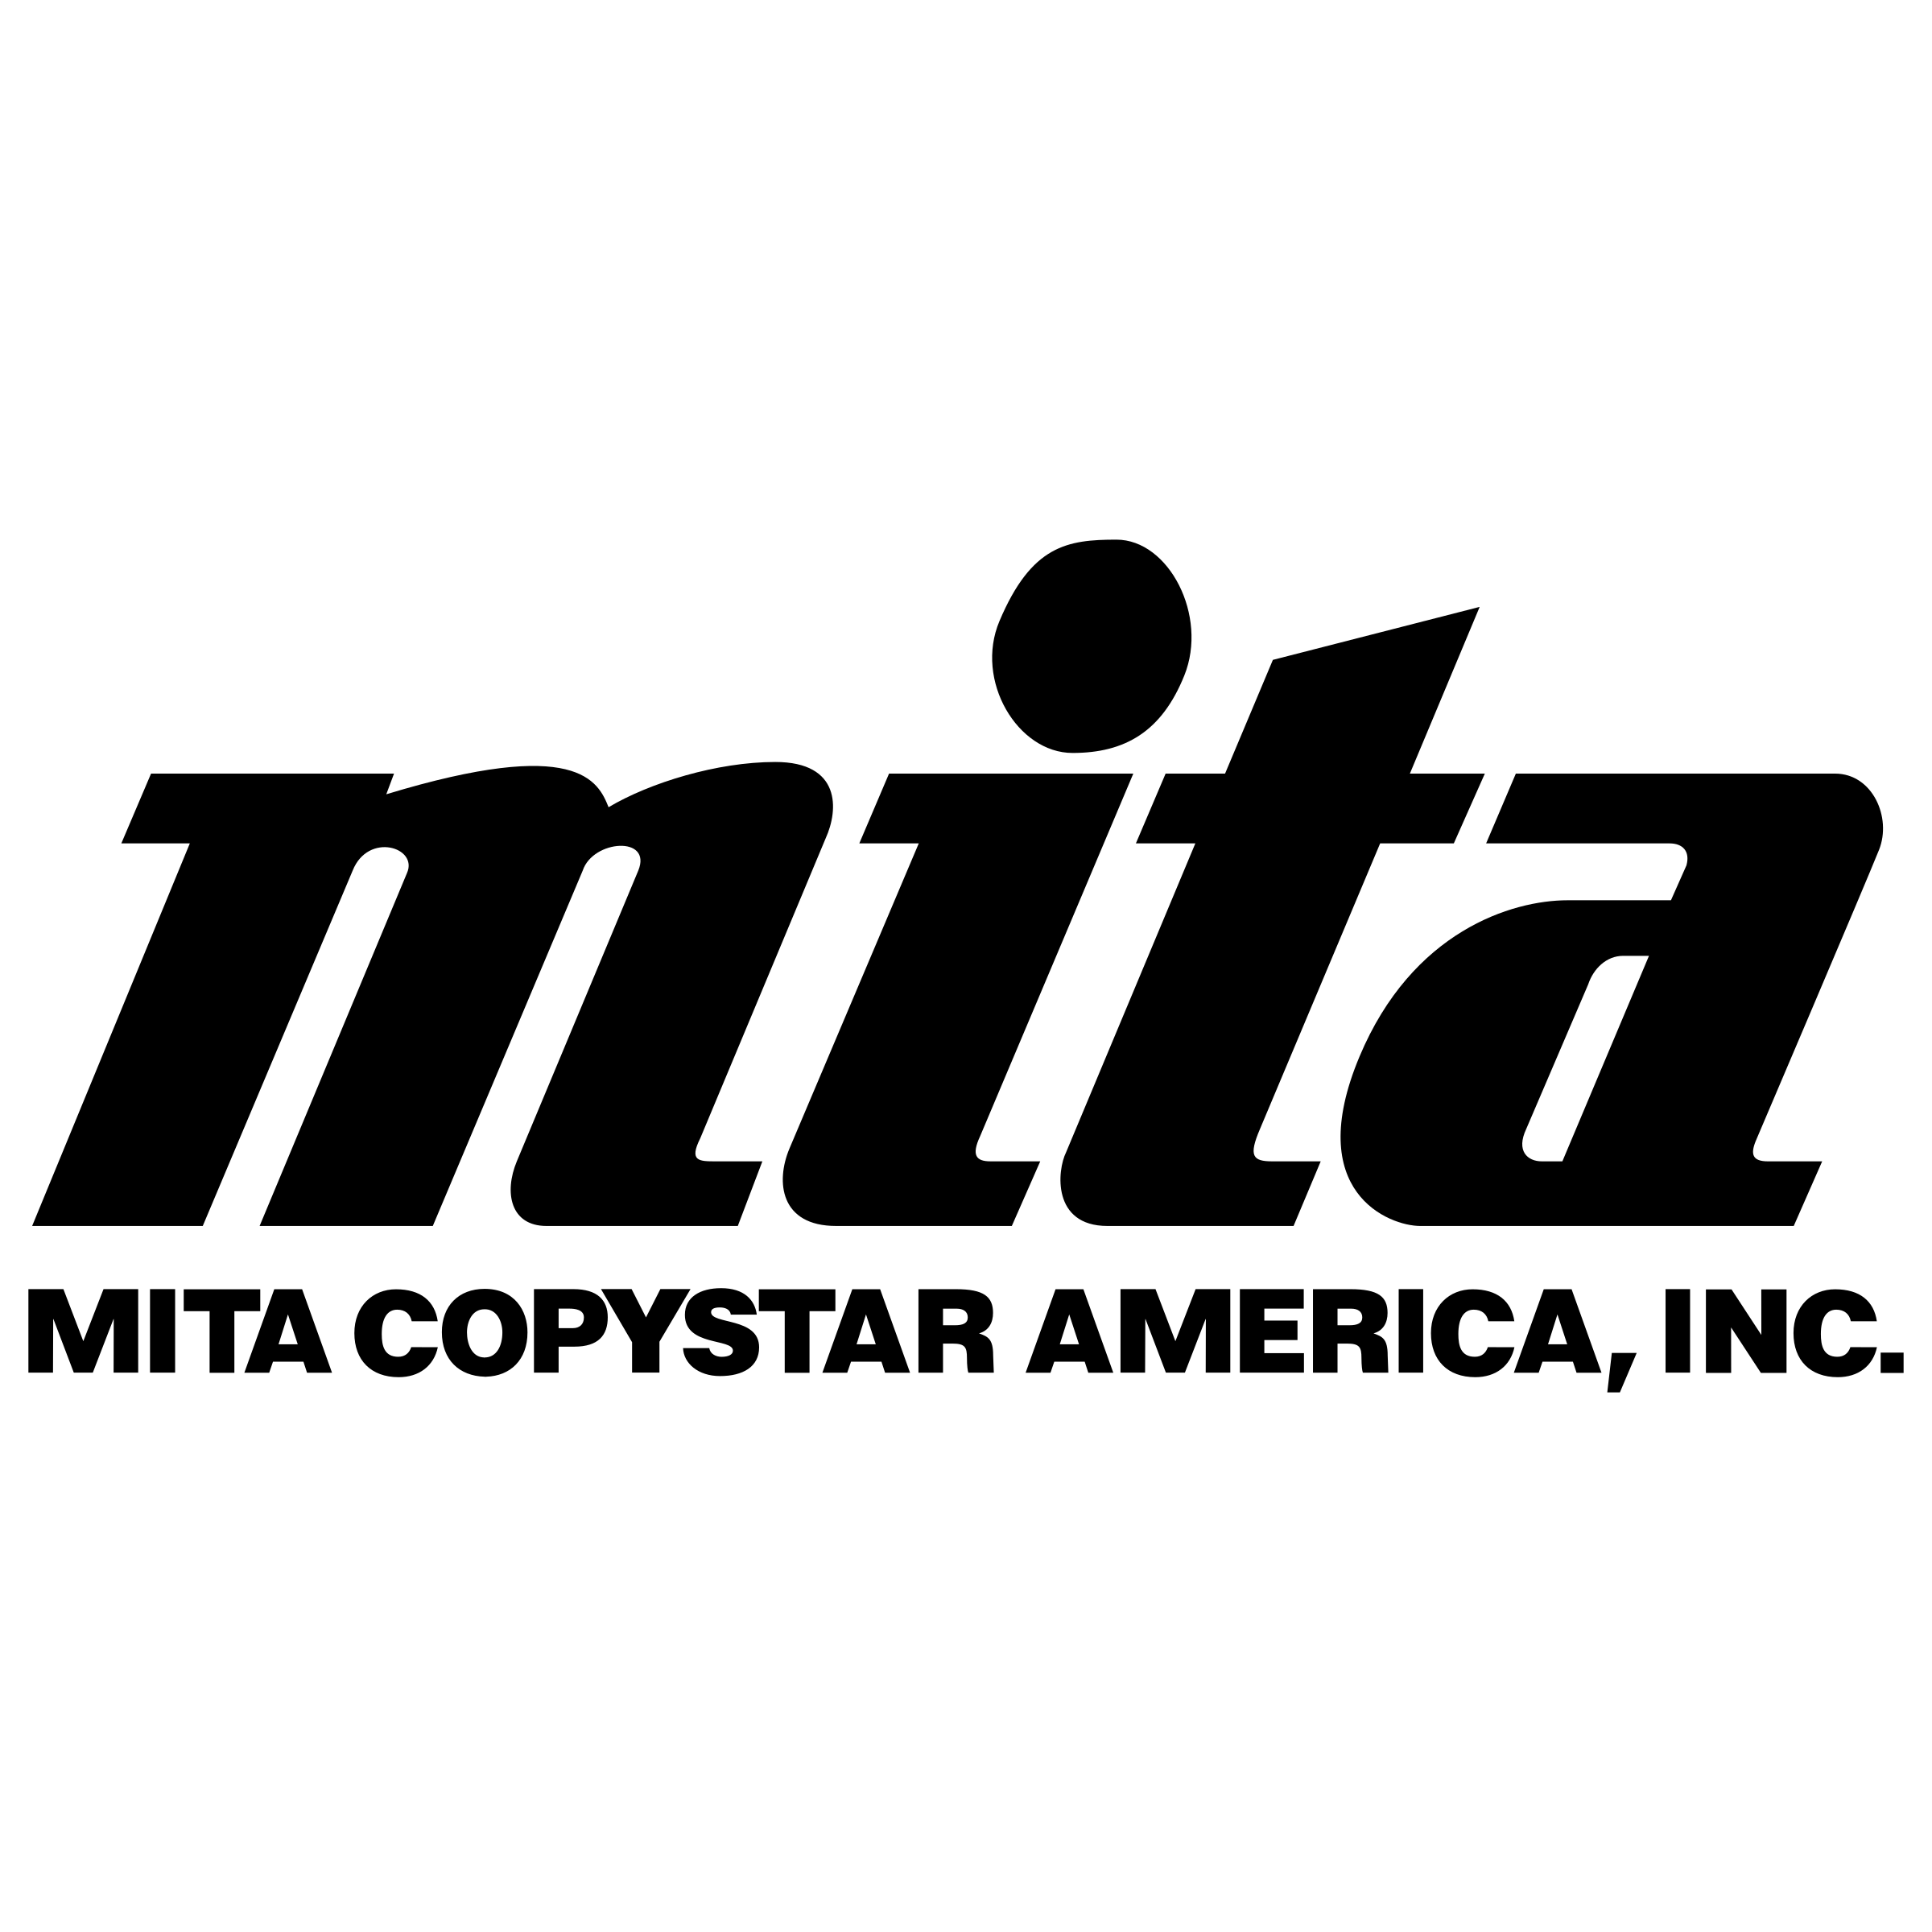 Copystar Logo - Mita Copystar America Logo PNG Transparent & SVG Vector